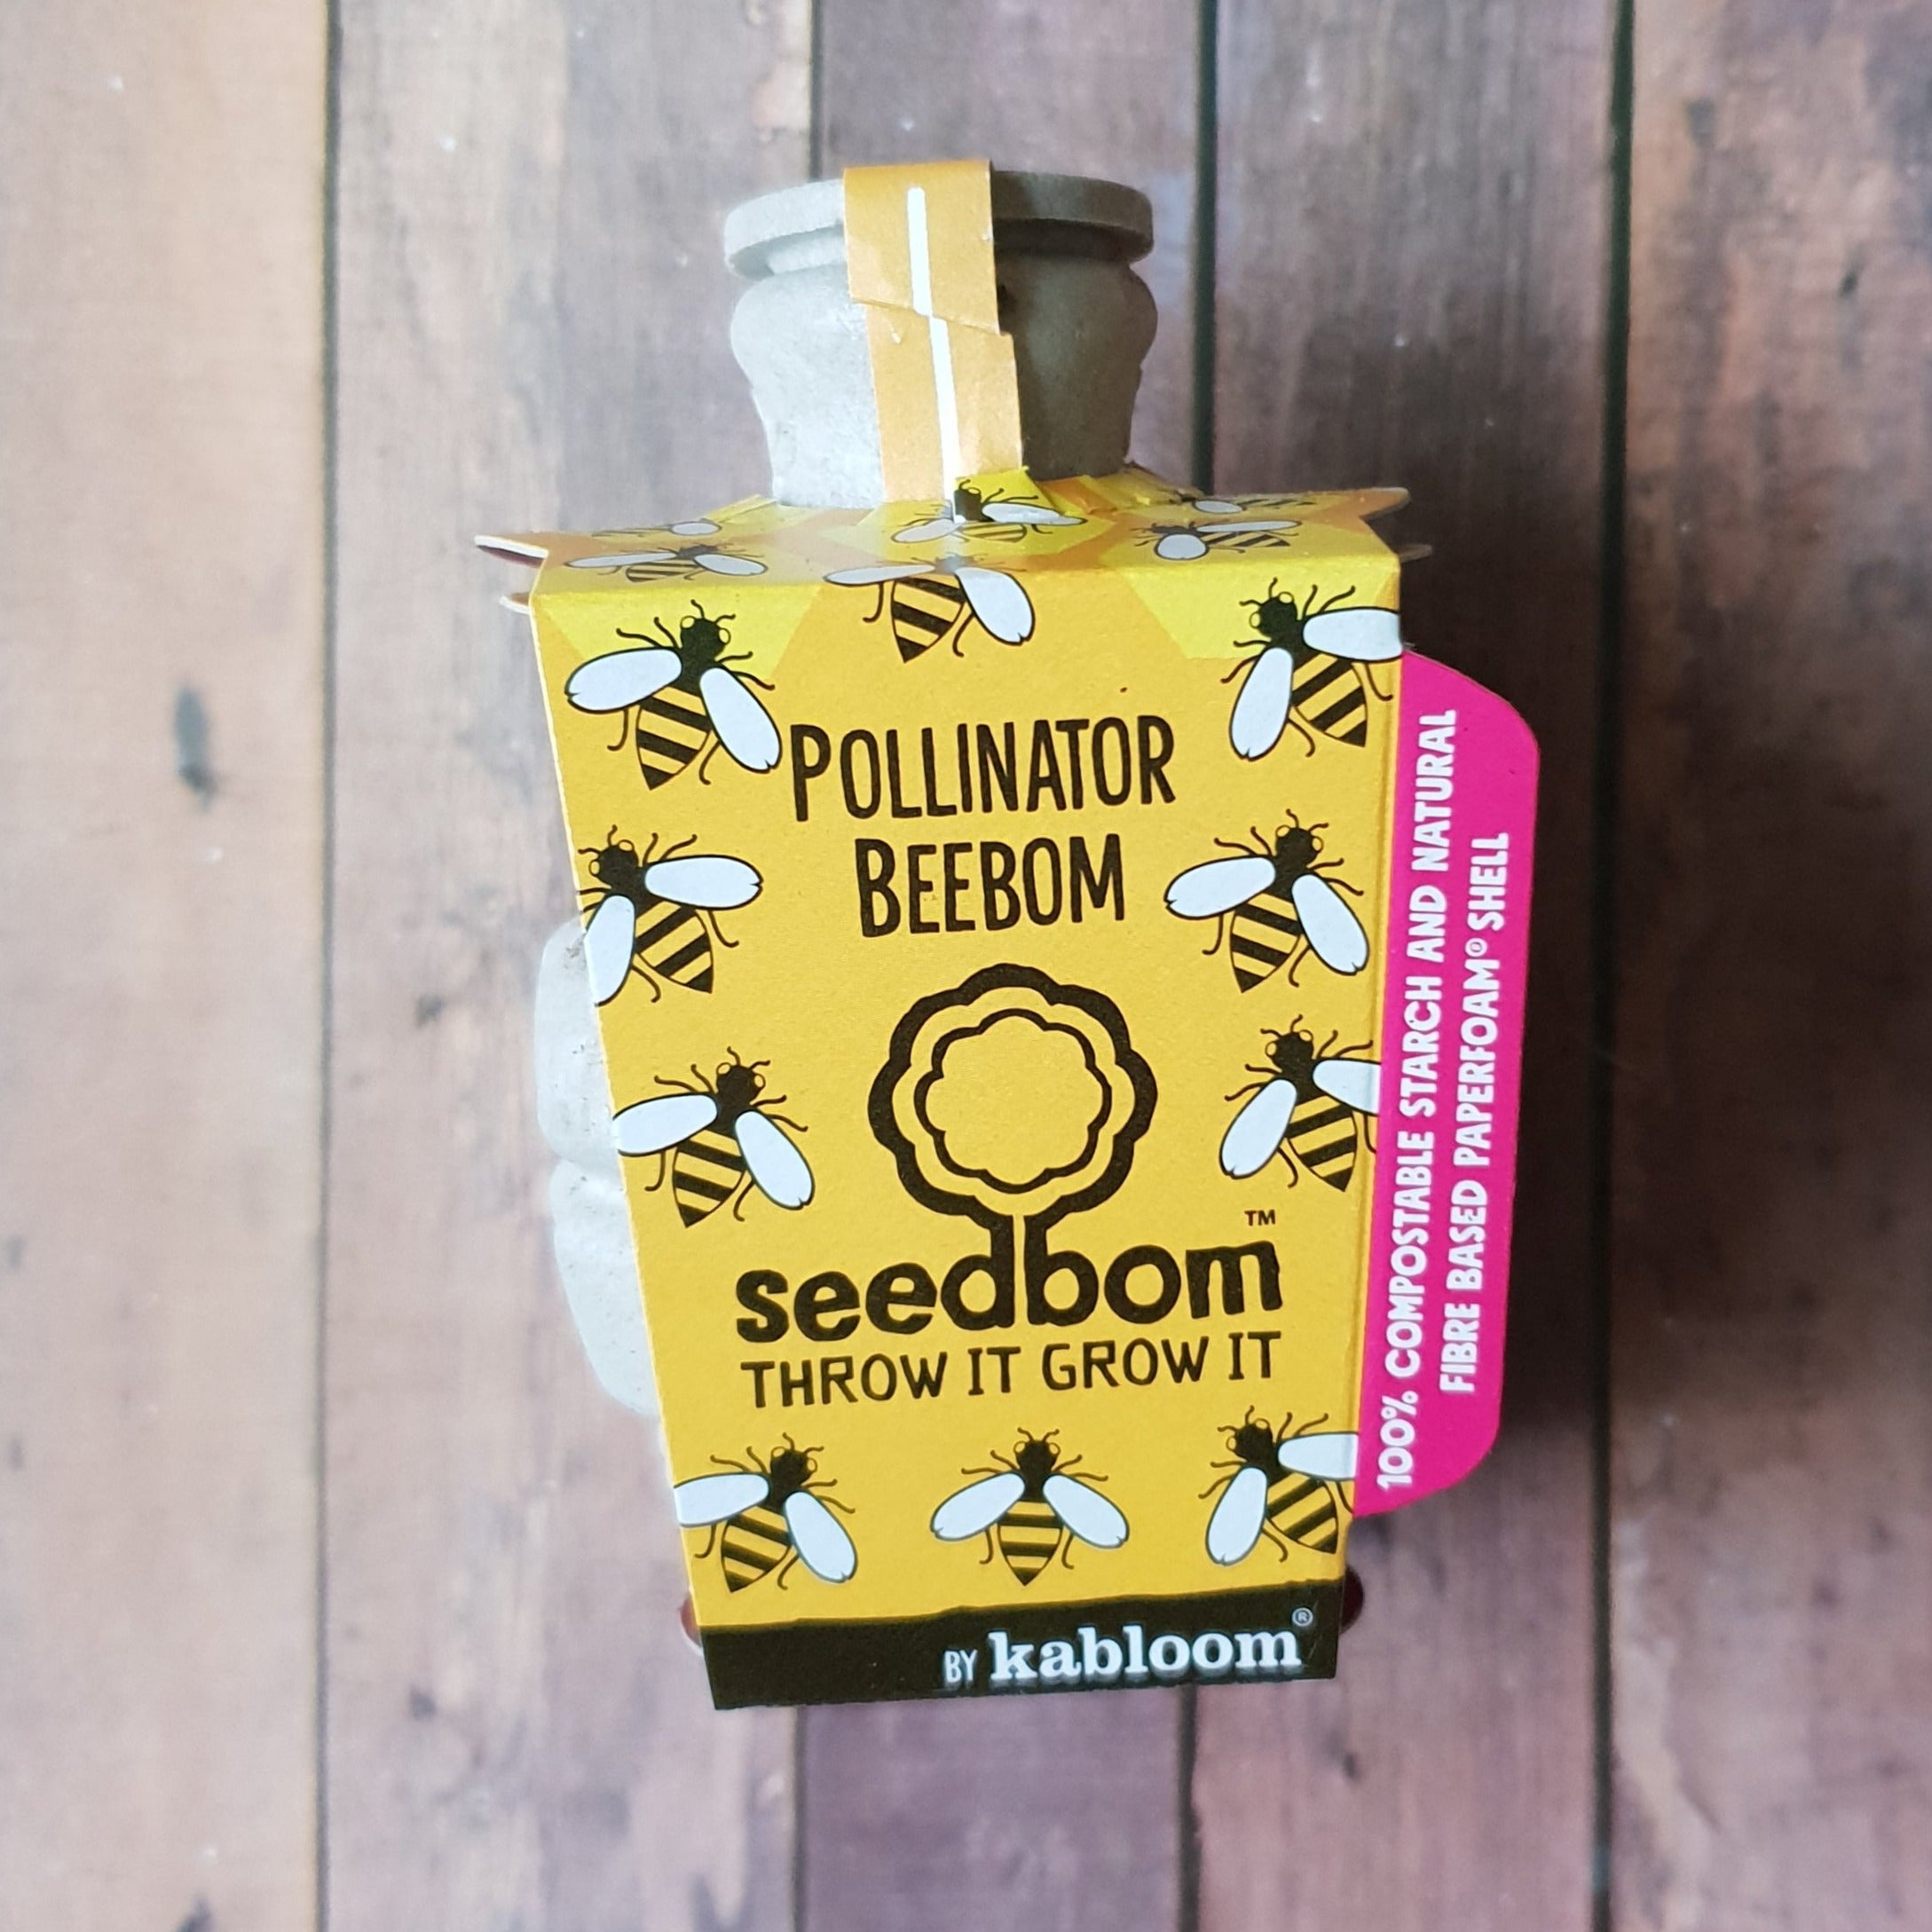 Kabloom Seedbom - Pollinator Beebom